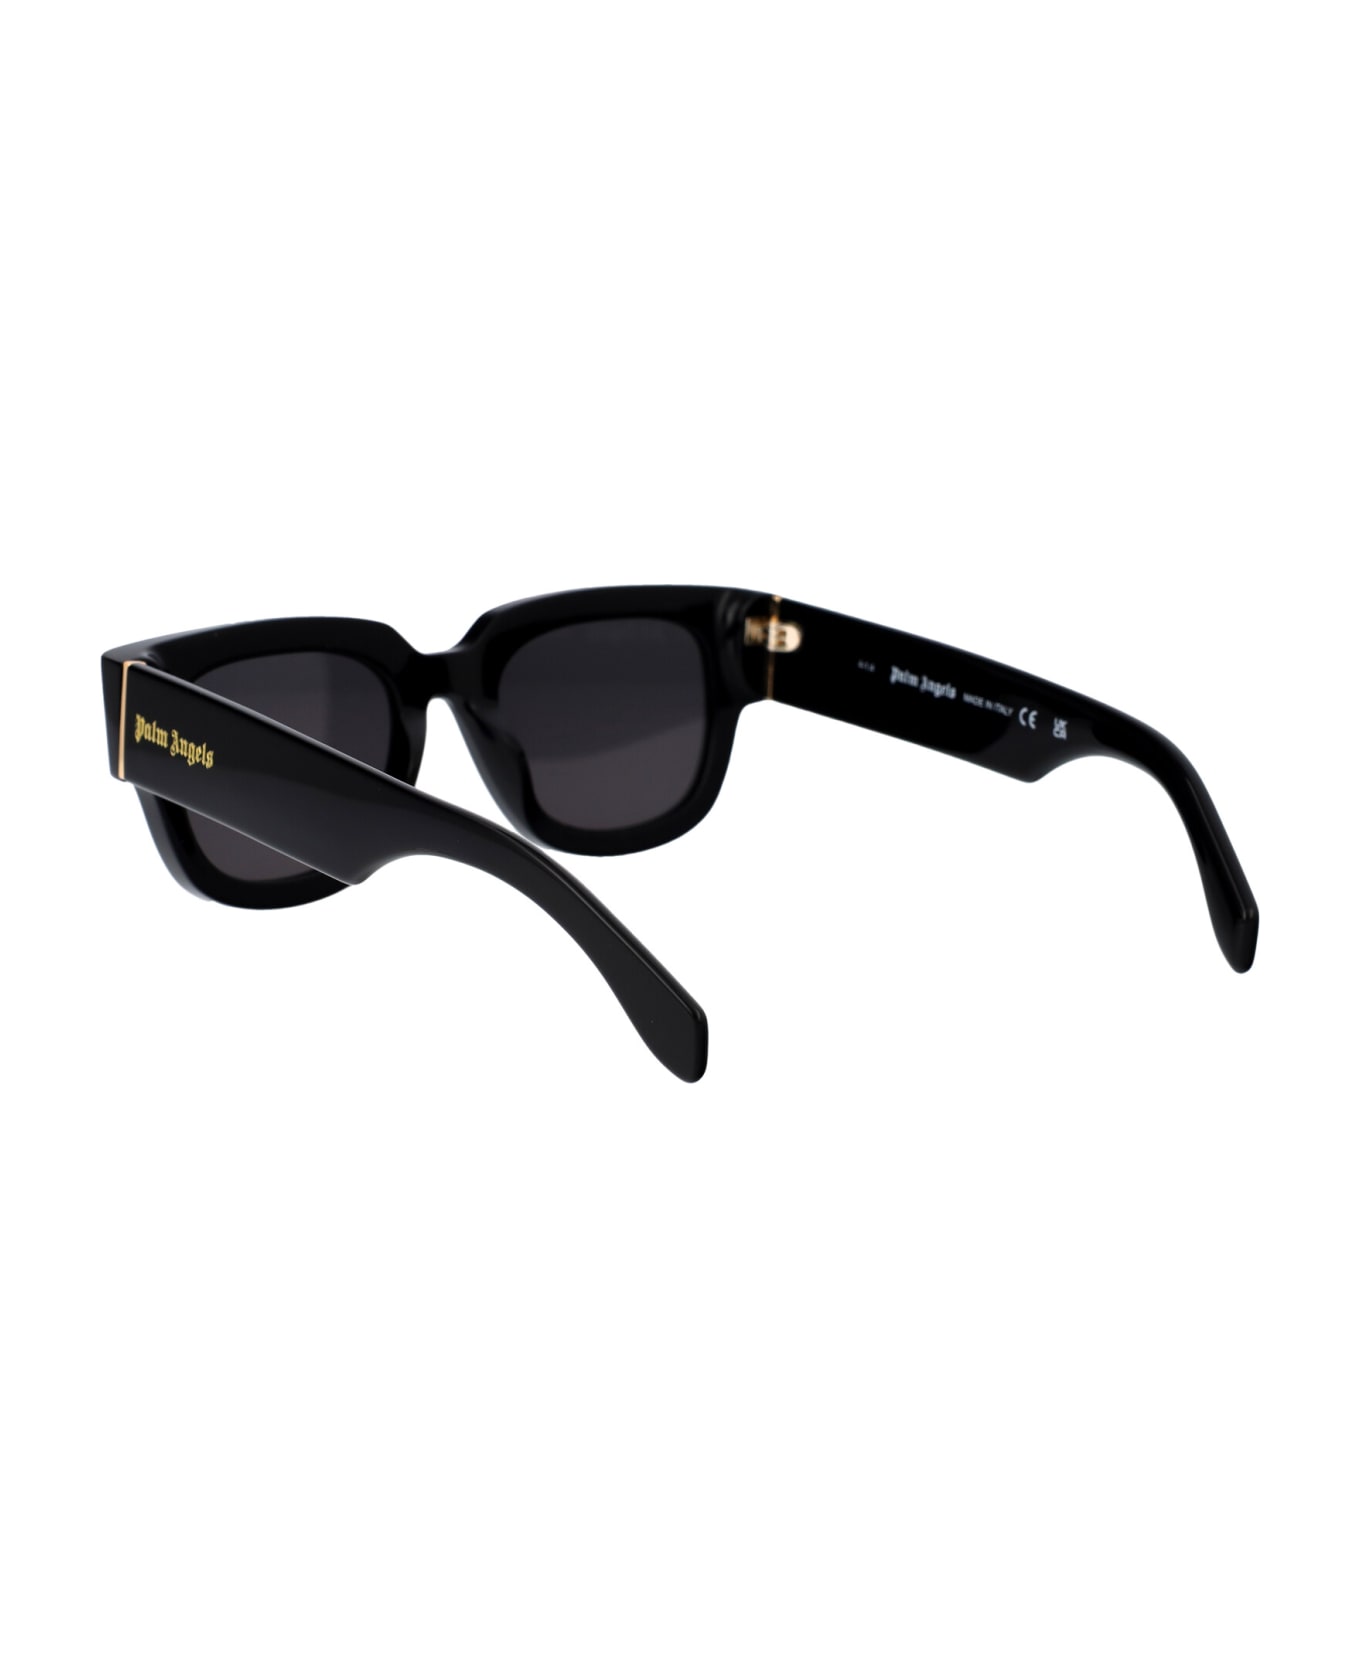 Palm Angels Monterey Sunglasses - 1007 BLACK